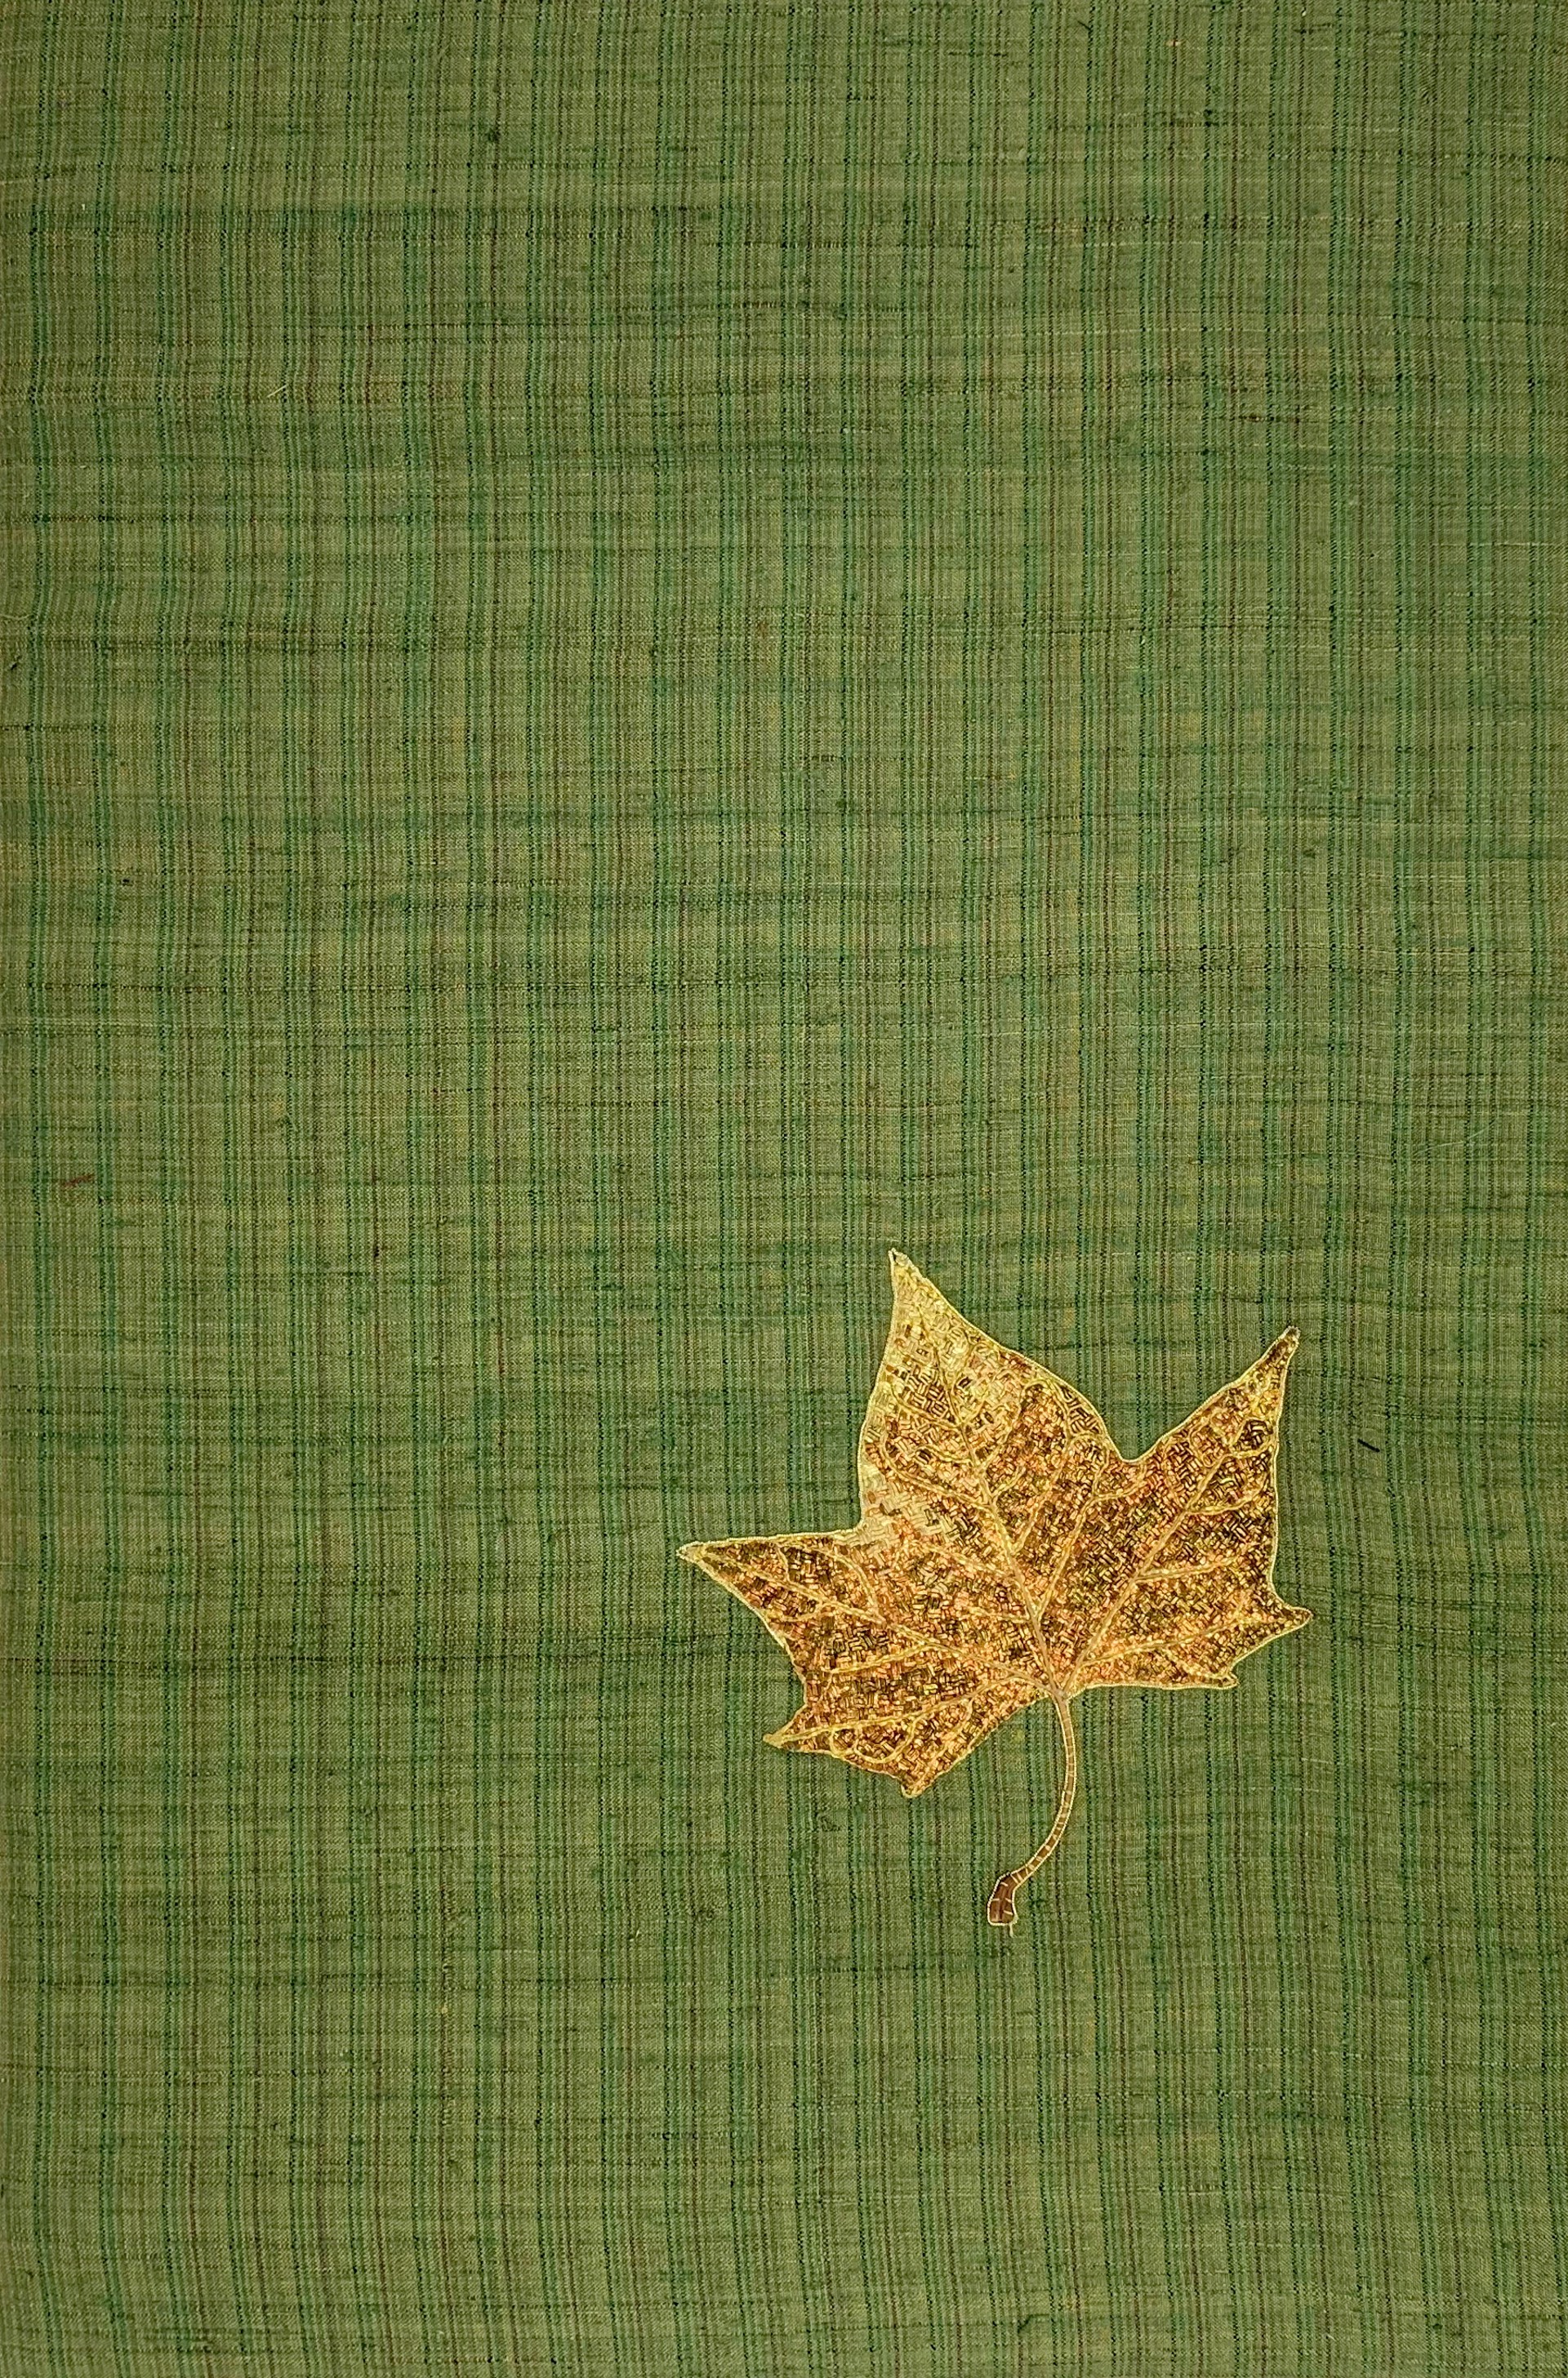 Autumn I: Planetree Leaf by Tiao Nithakhong Somsanith